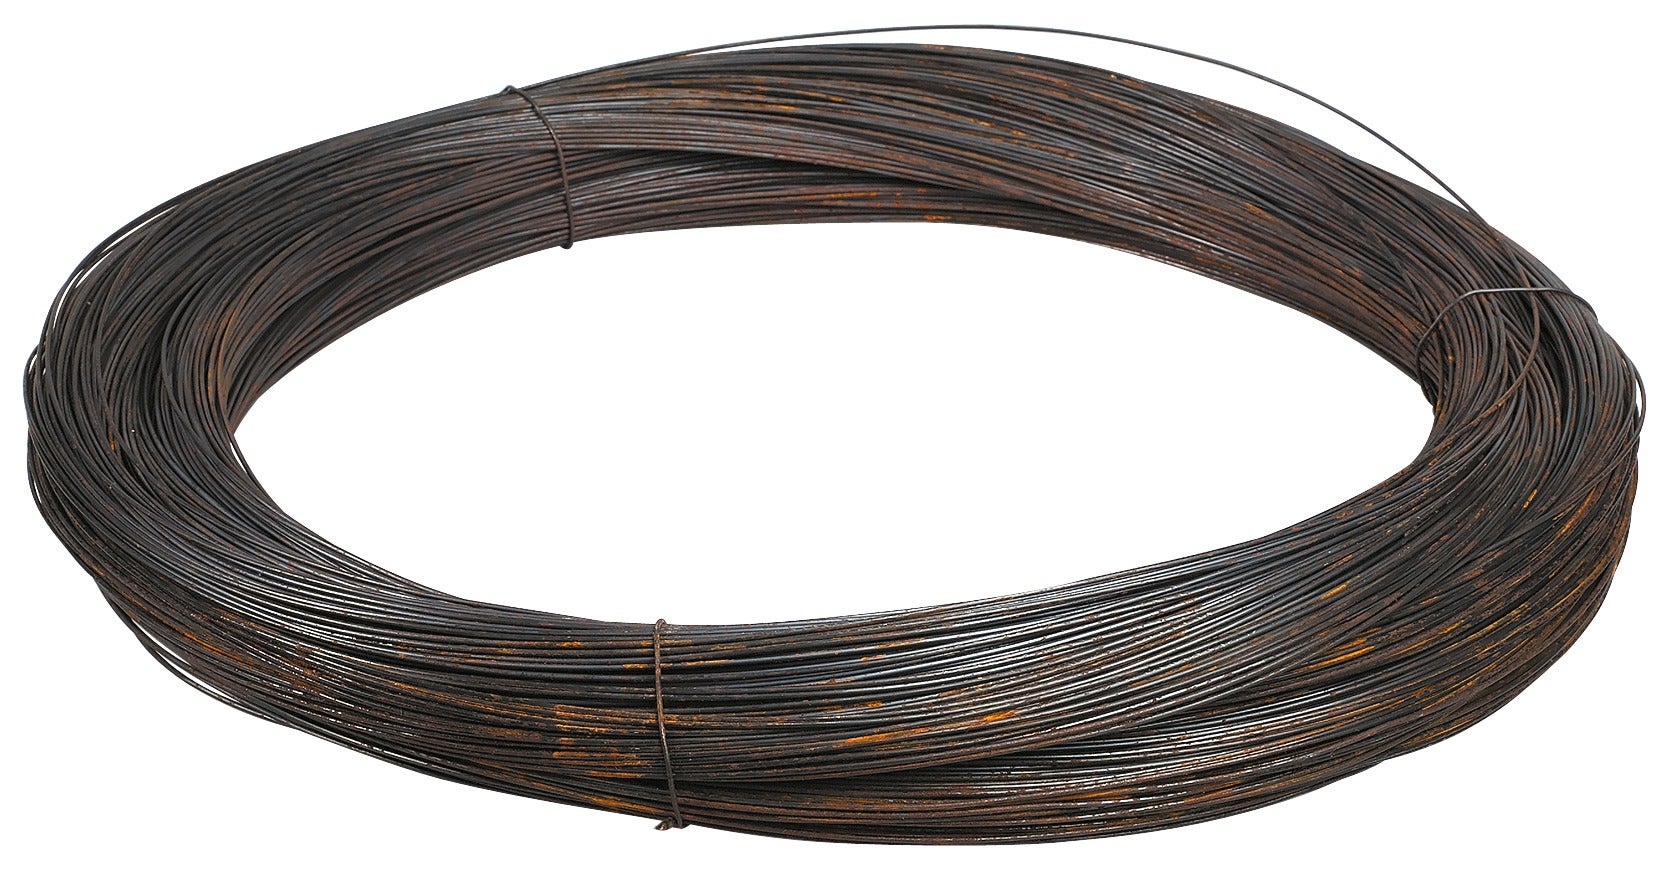 Fil de fer recuit rouillé diamètre 1.4 mm, bobine de 20 mètres. Fil de fer  recuit rouillé, Fil de fer decoration